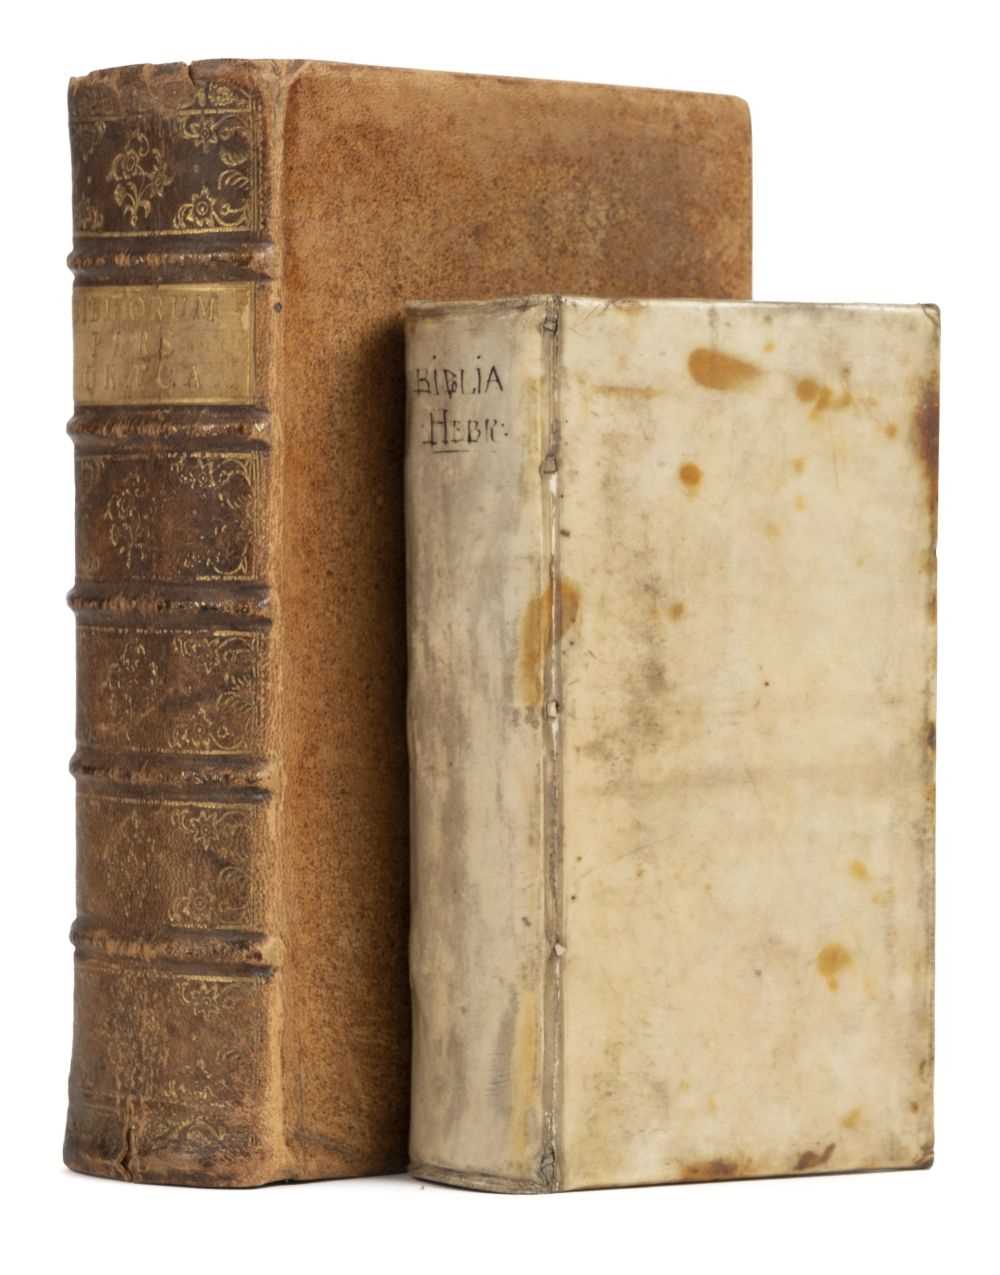 Lot 234 - Bible [Greek]. Bibliorum pars Graeca quae Hebraice, [Leiden], 1612